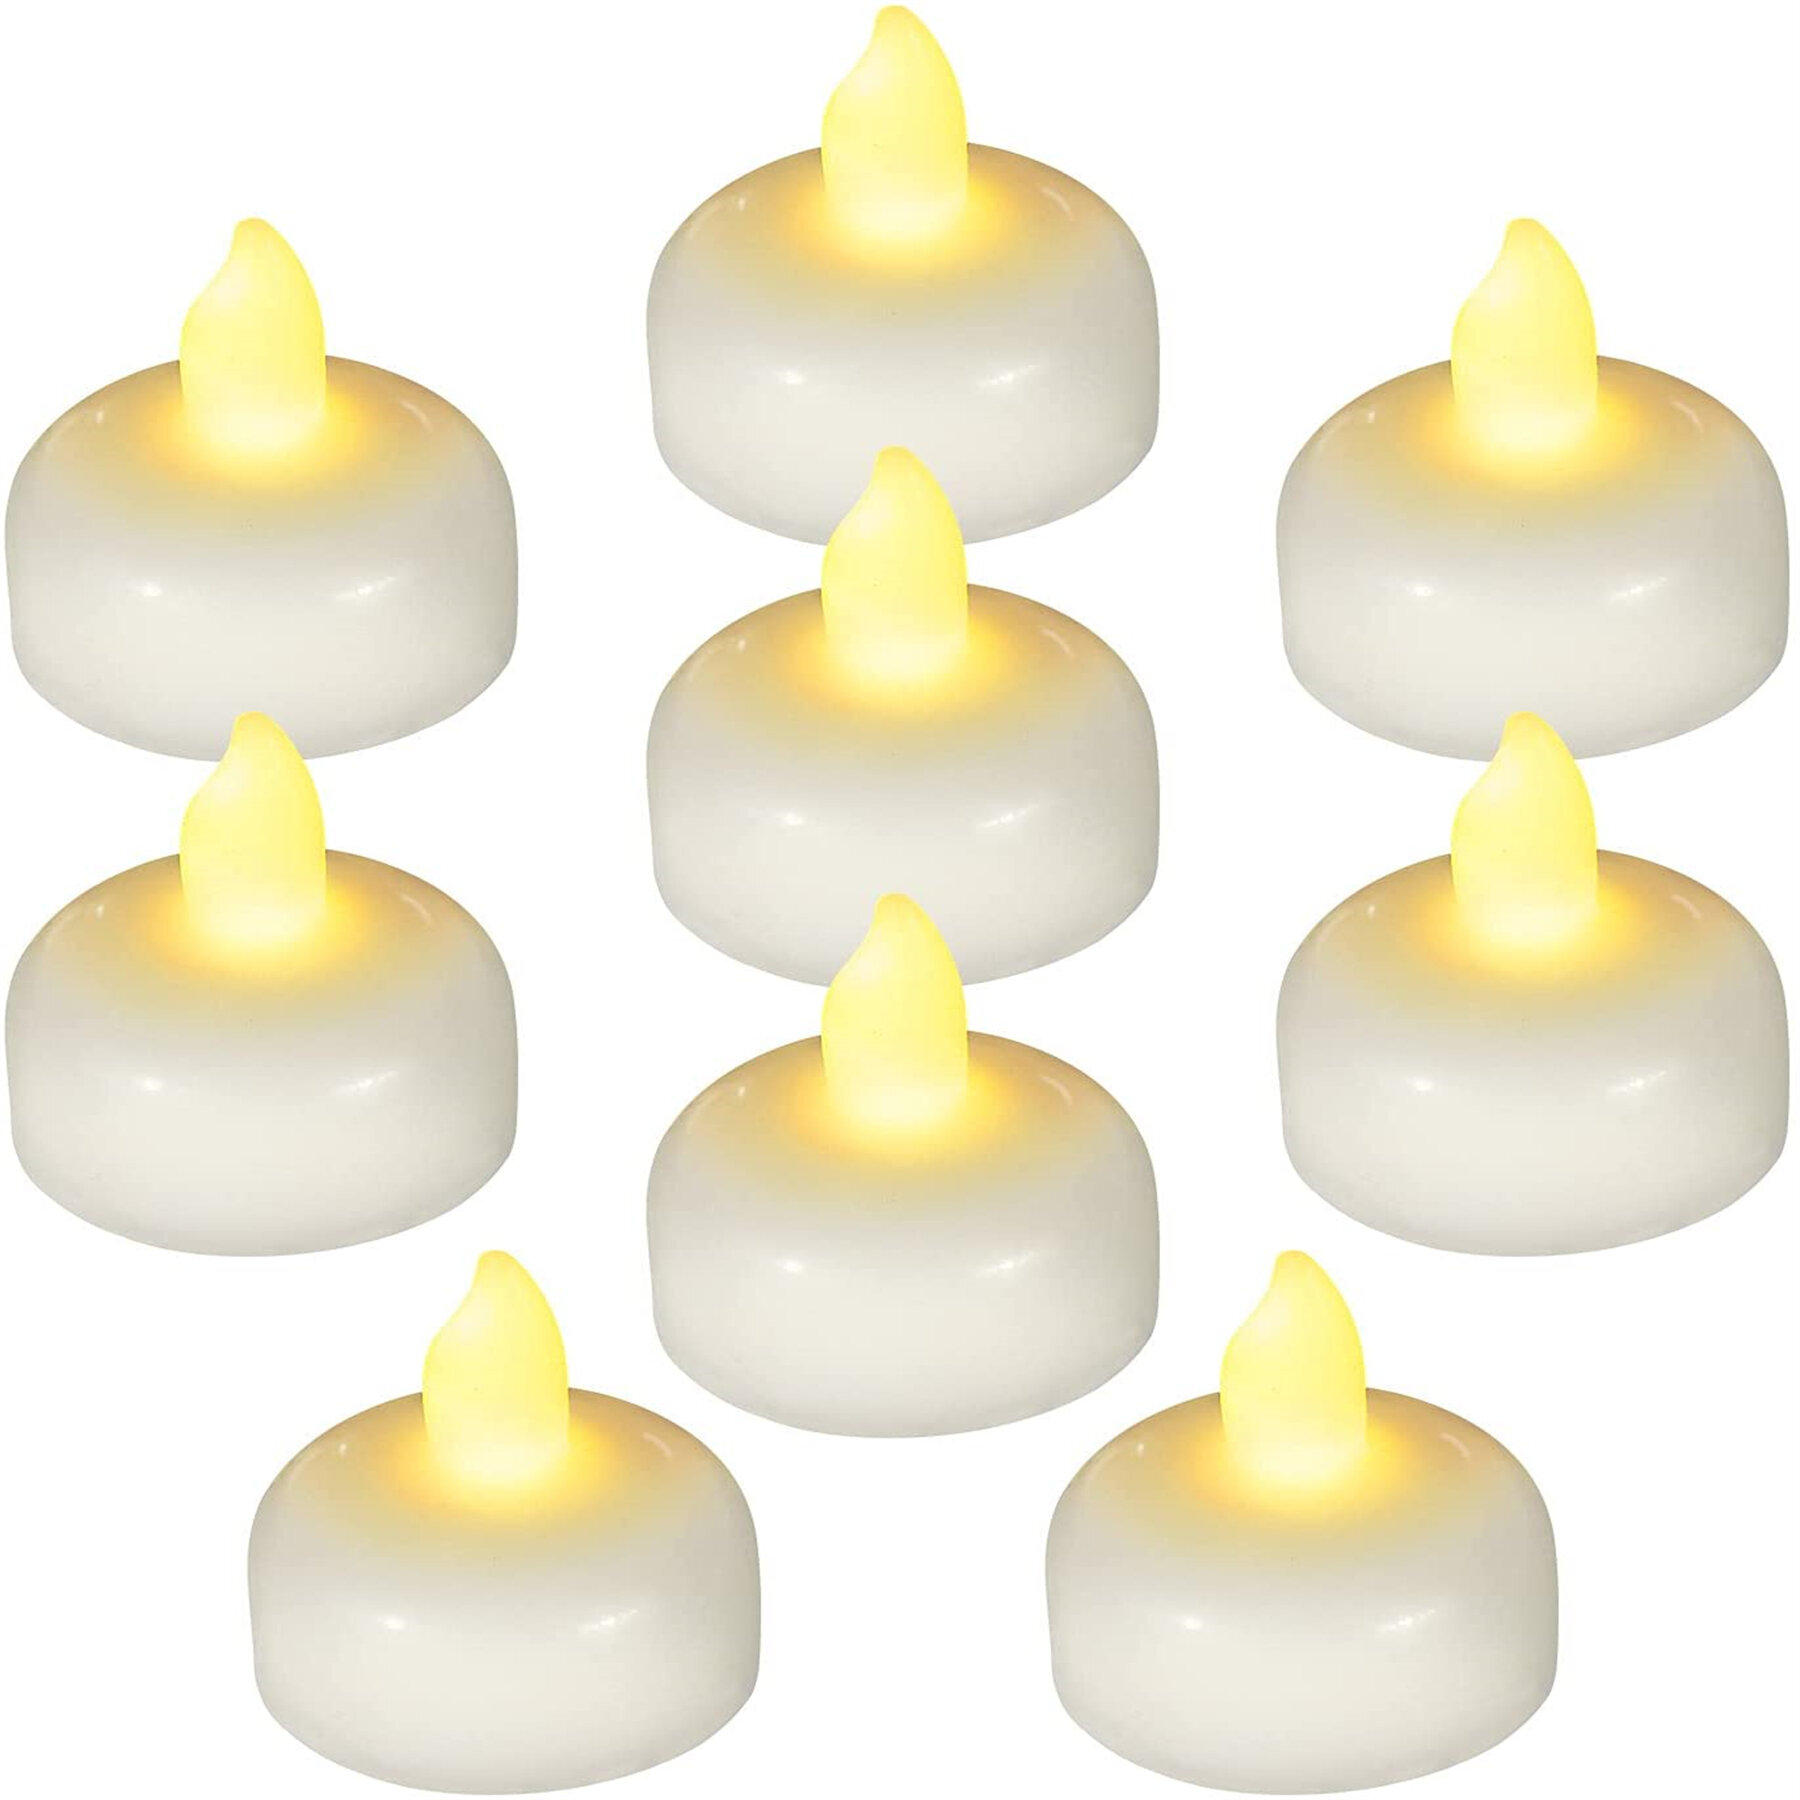 Details about   12pcs LED Tea Lights Candles Flameless Tealights Unscented Candle #ur 